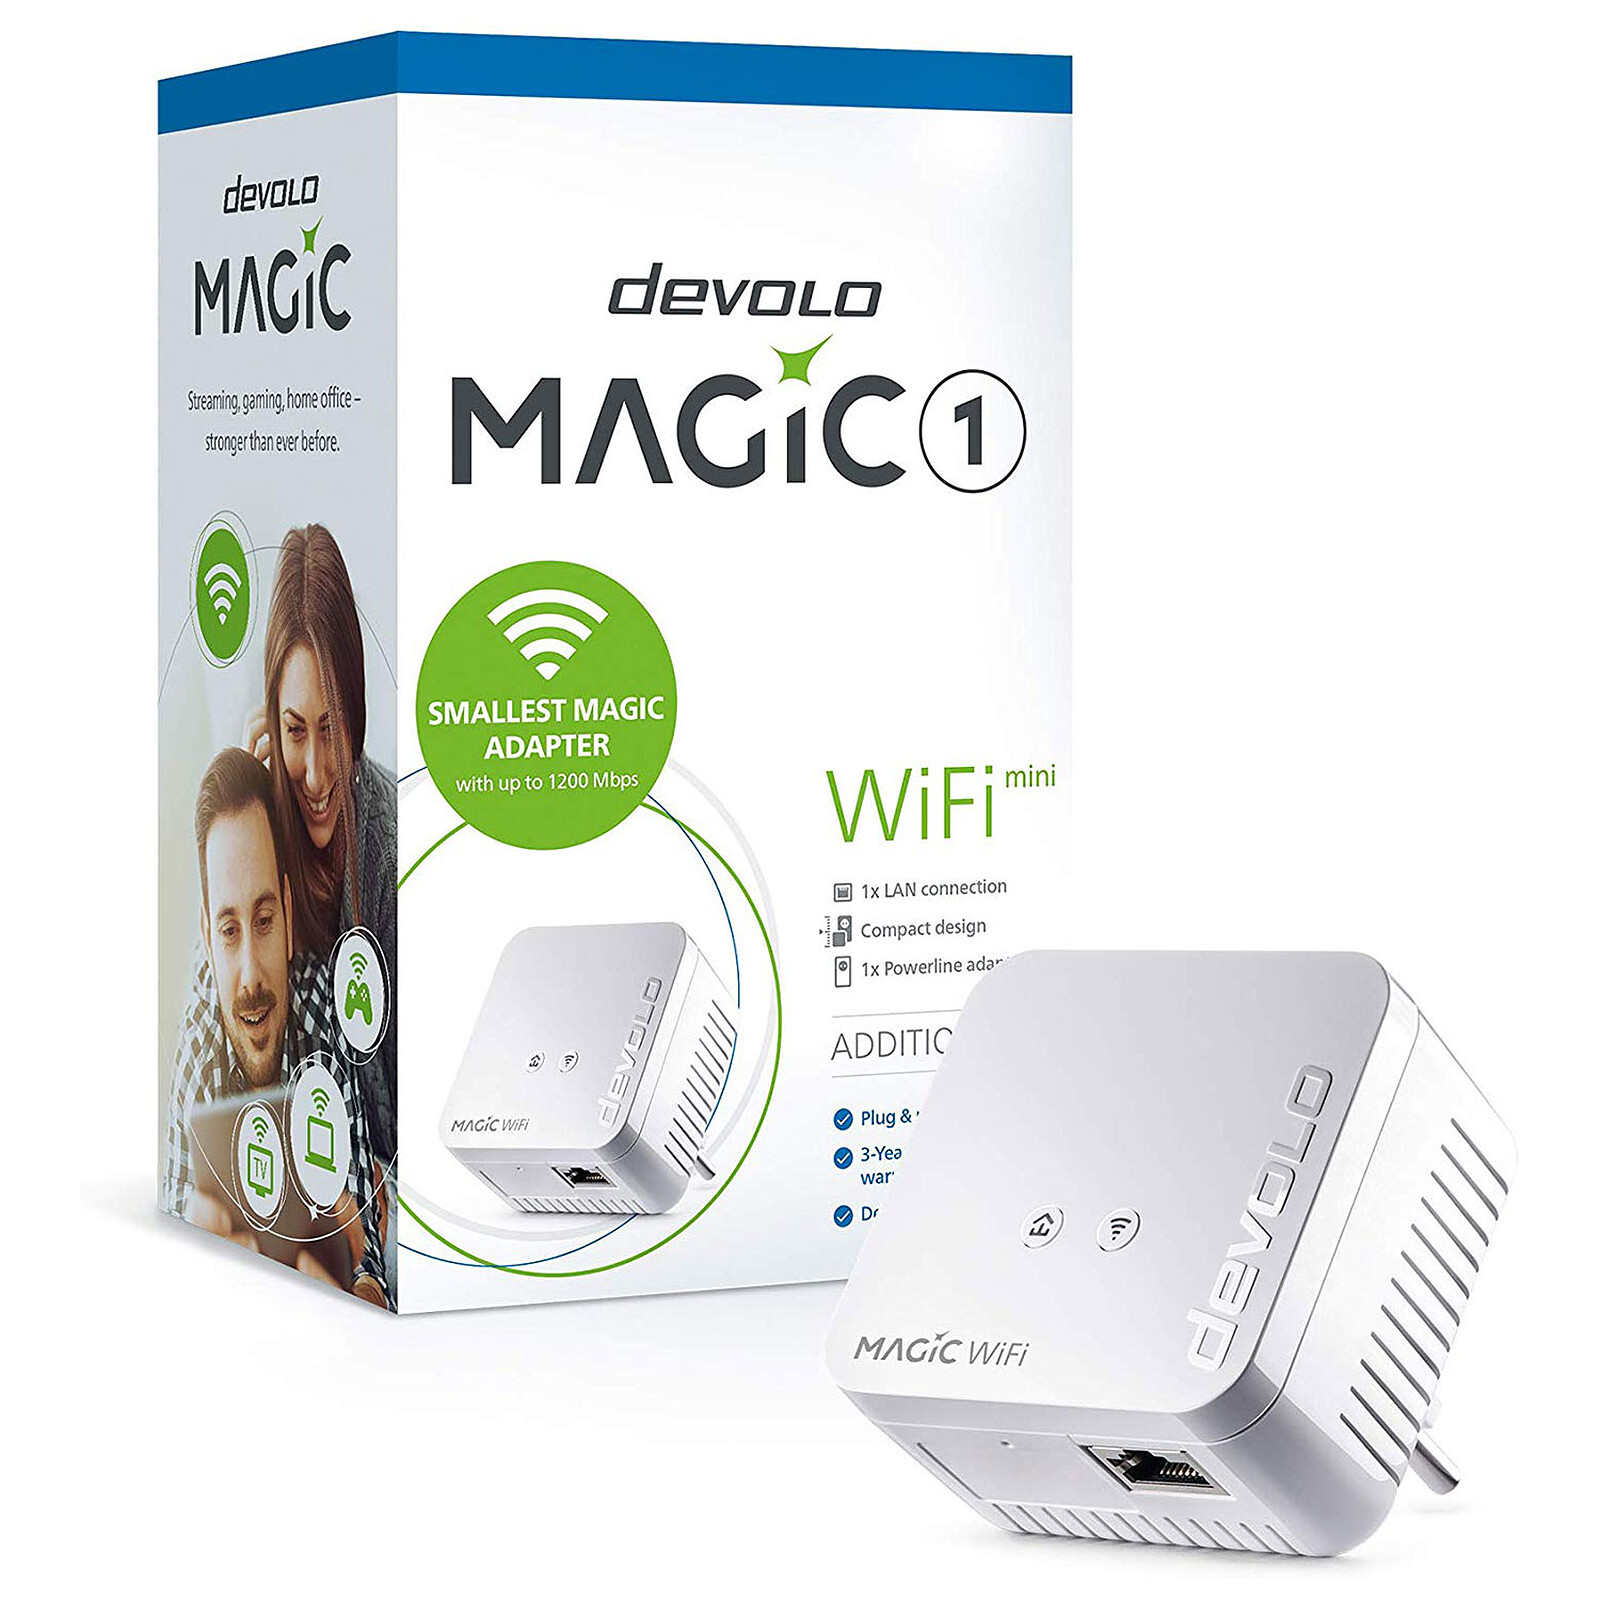 devolo Magic 1 WiFi mini - Powerline adapter - LDLC 3-year warranty